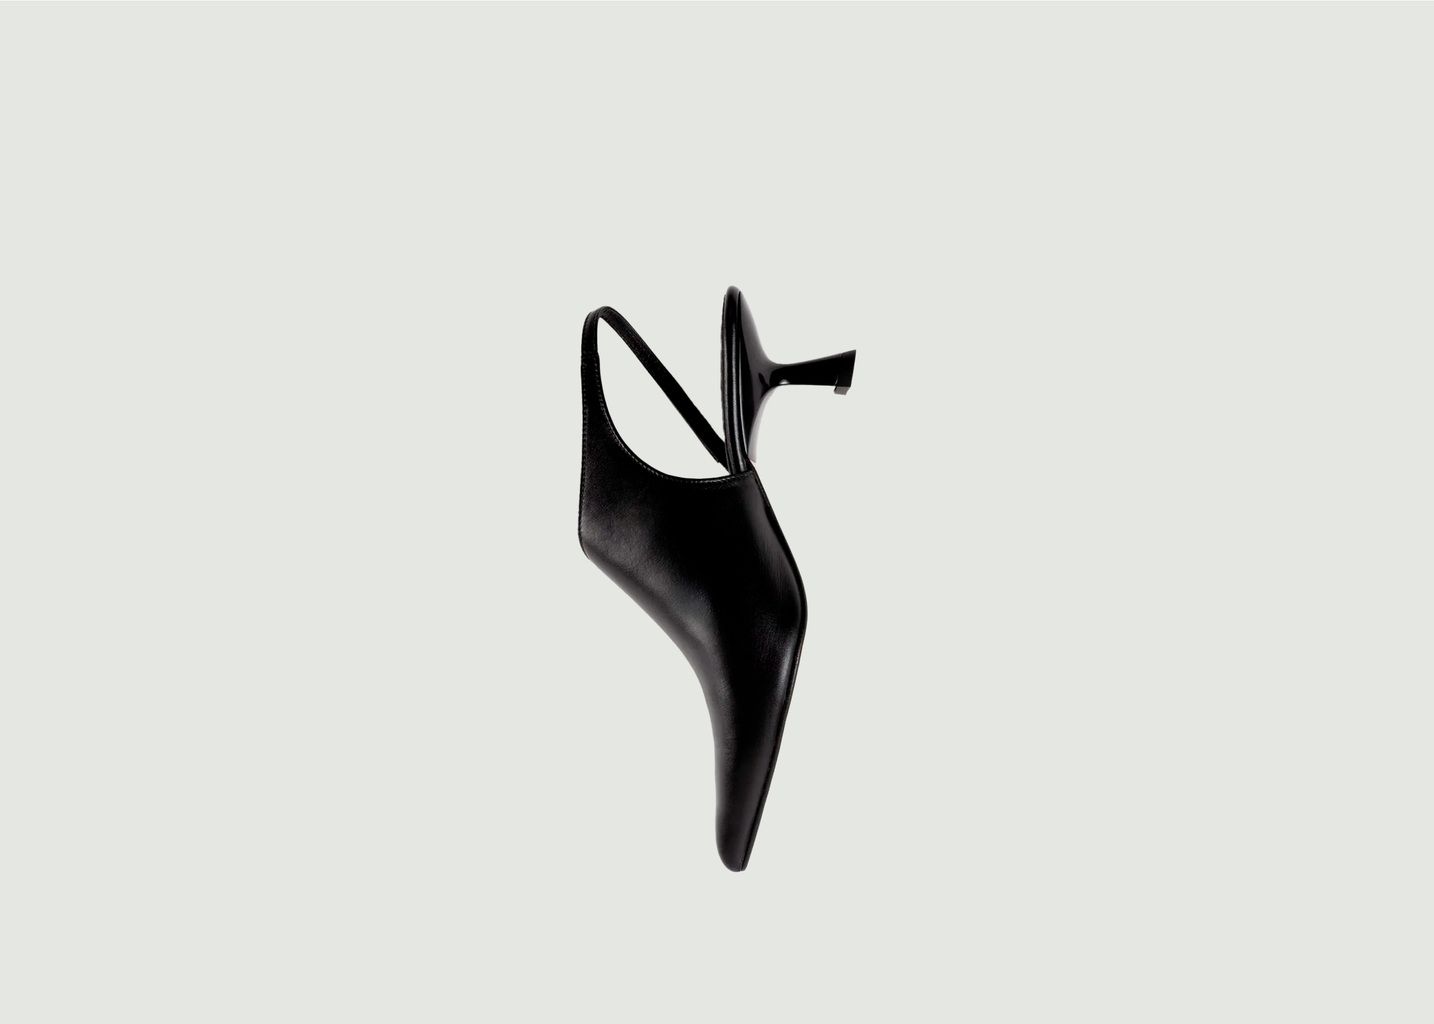 Greta leather closed-toe heeled sandals - Souliers Martinez